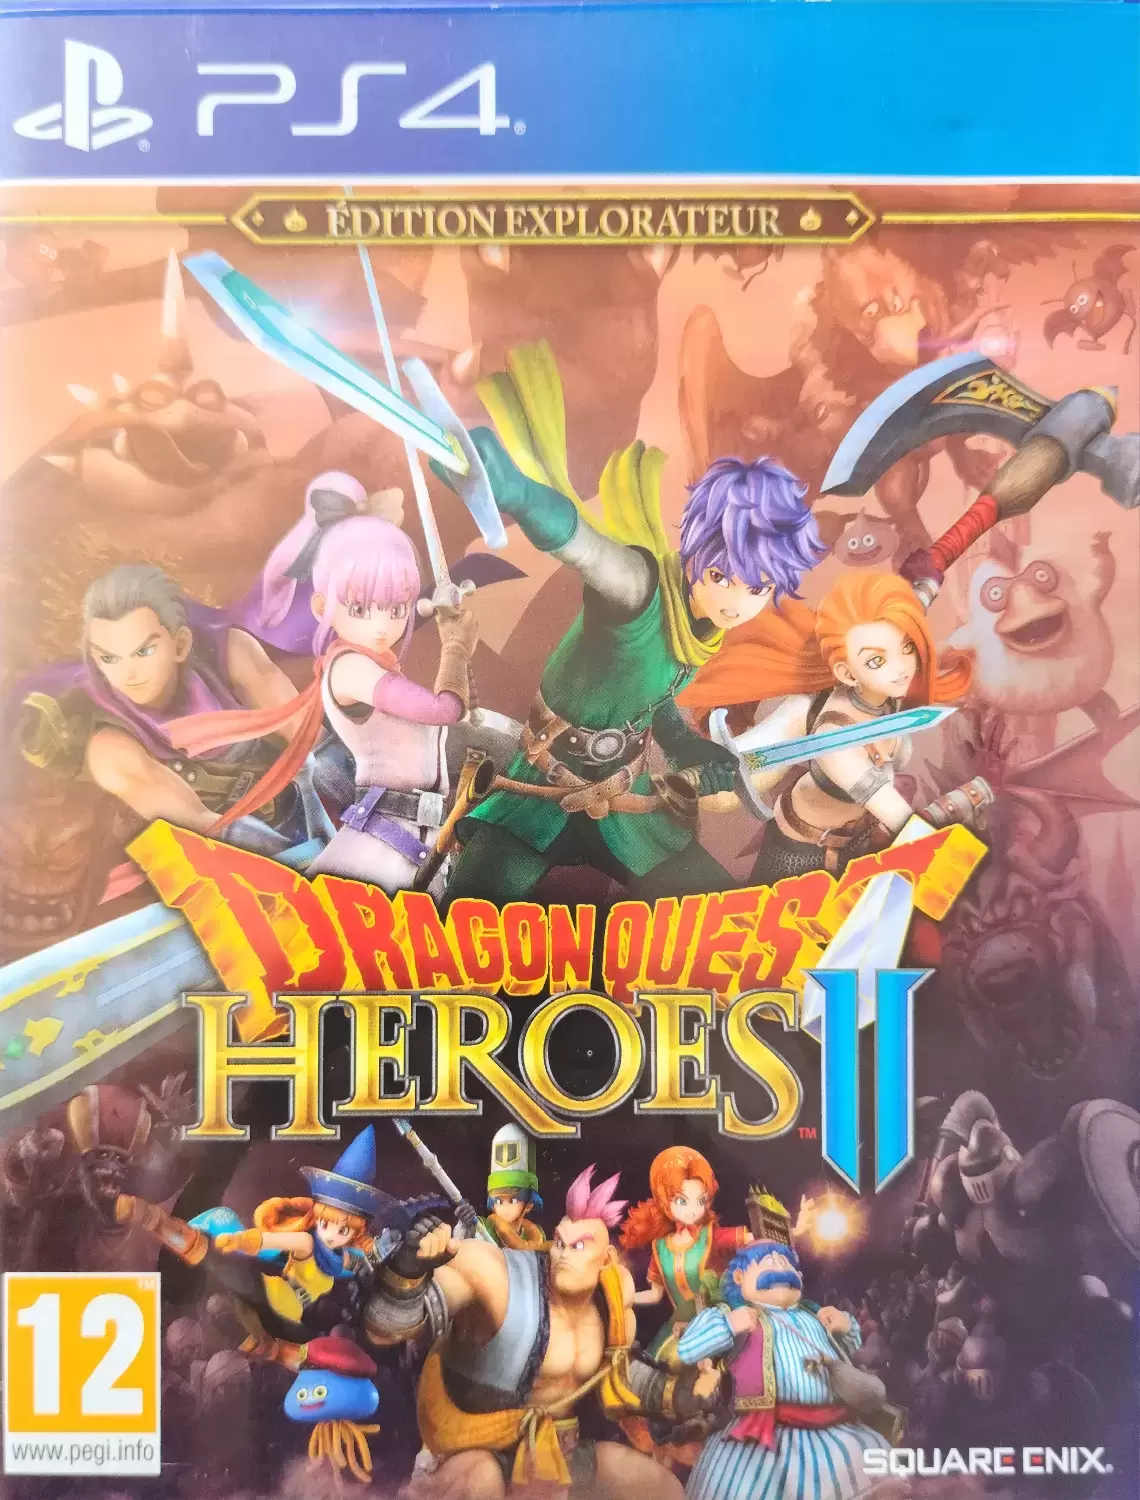 PS4 Games - Dragon Quest Heroes II - Édition Explorateur